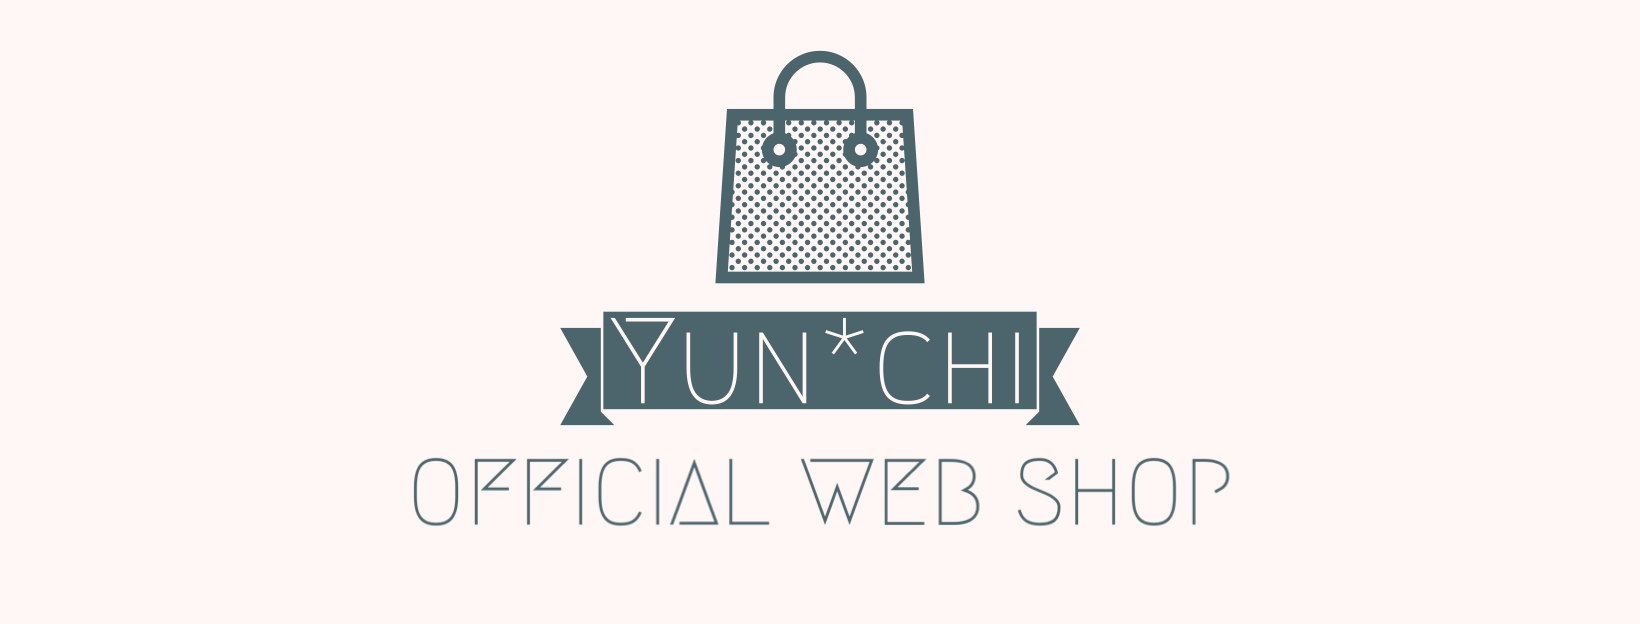 Yun*chi OFFICIAL WEB SHOP